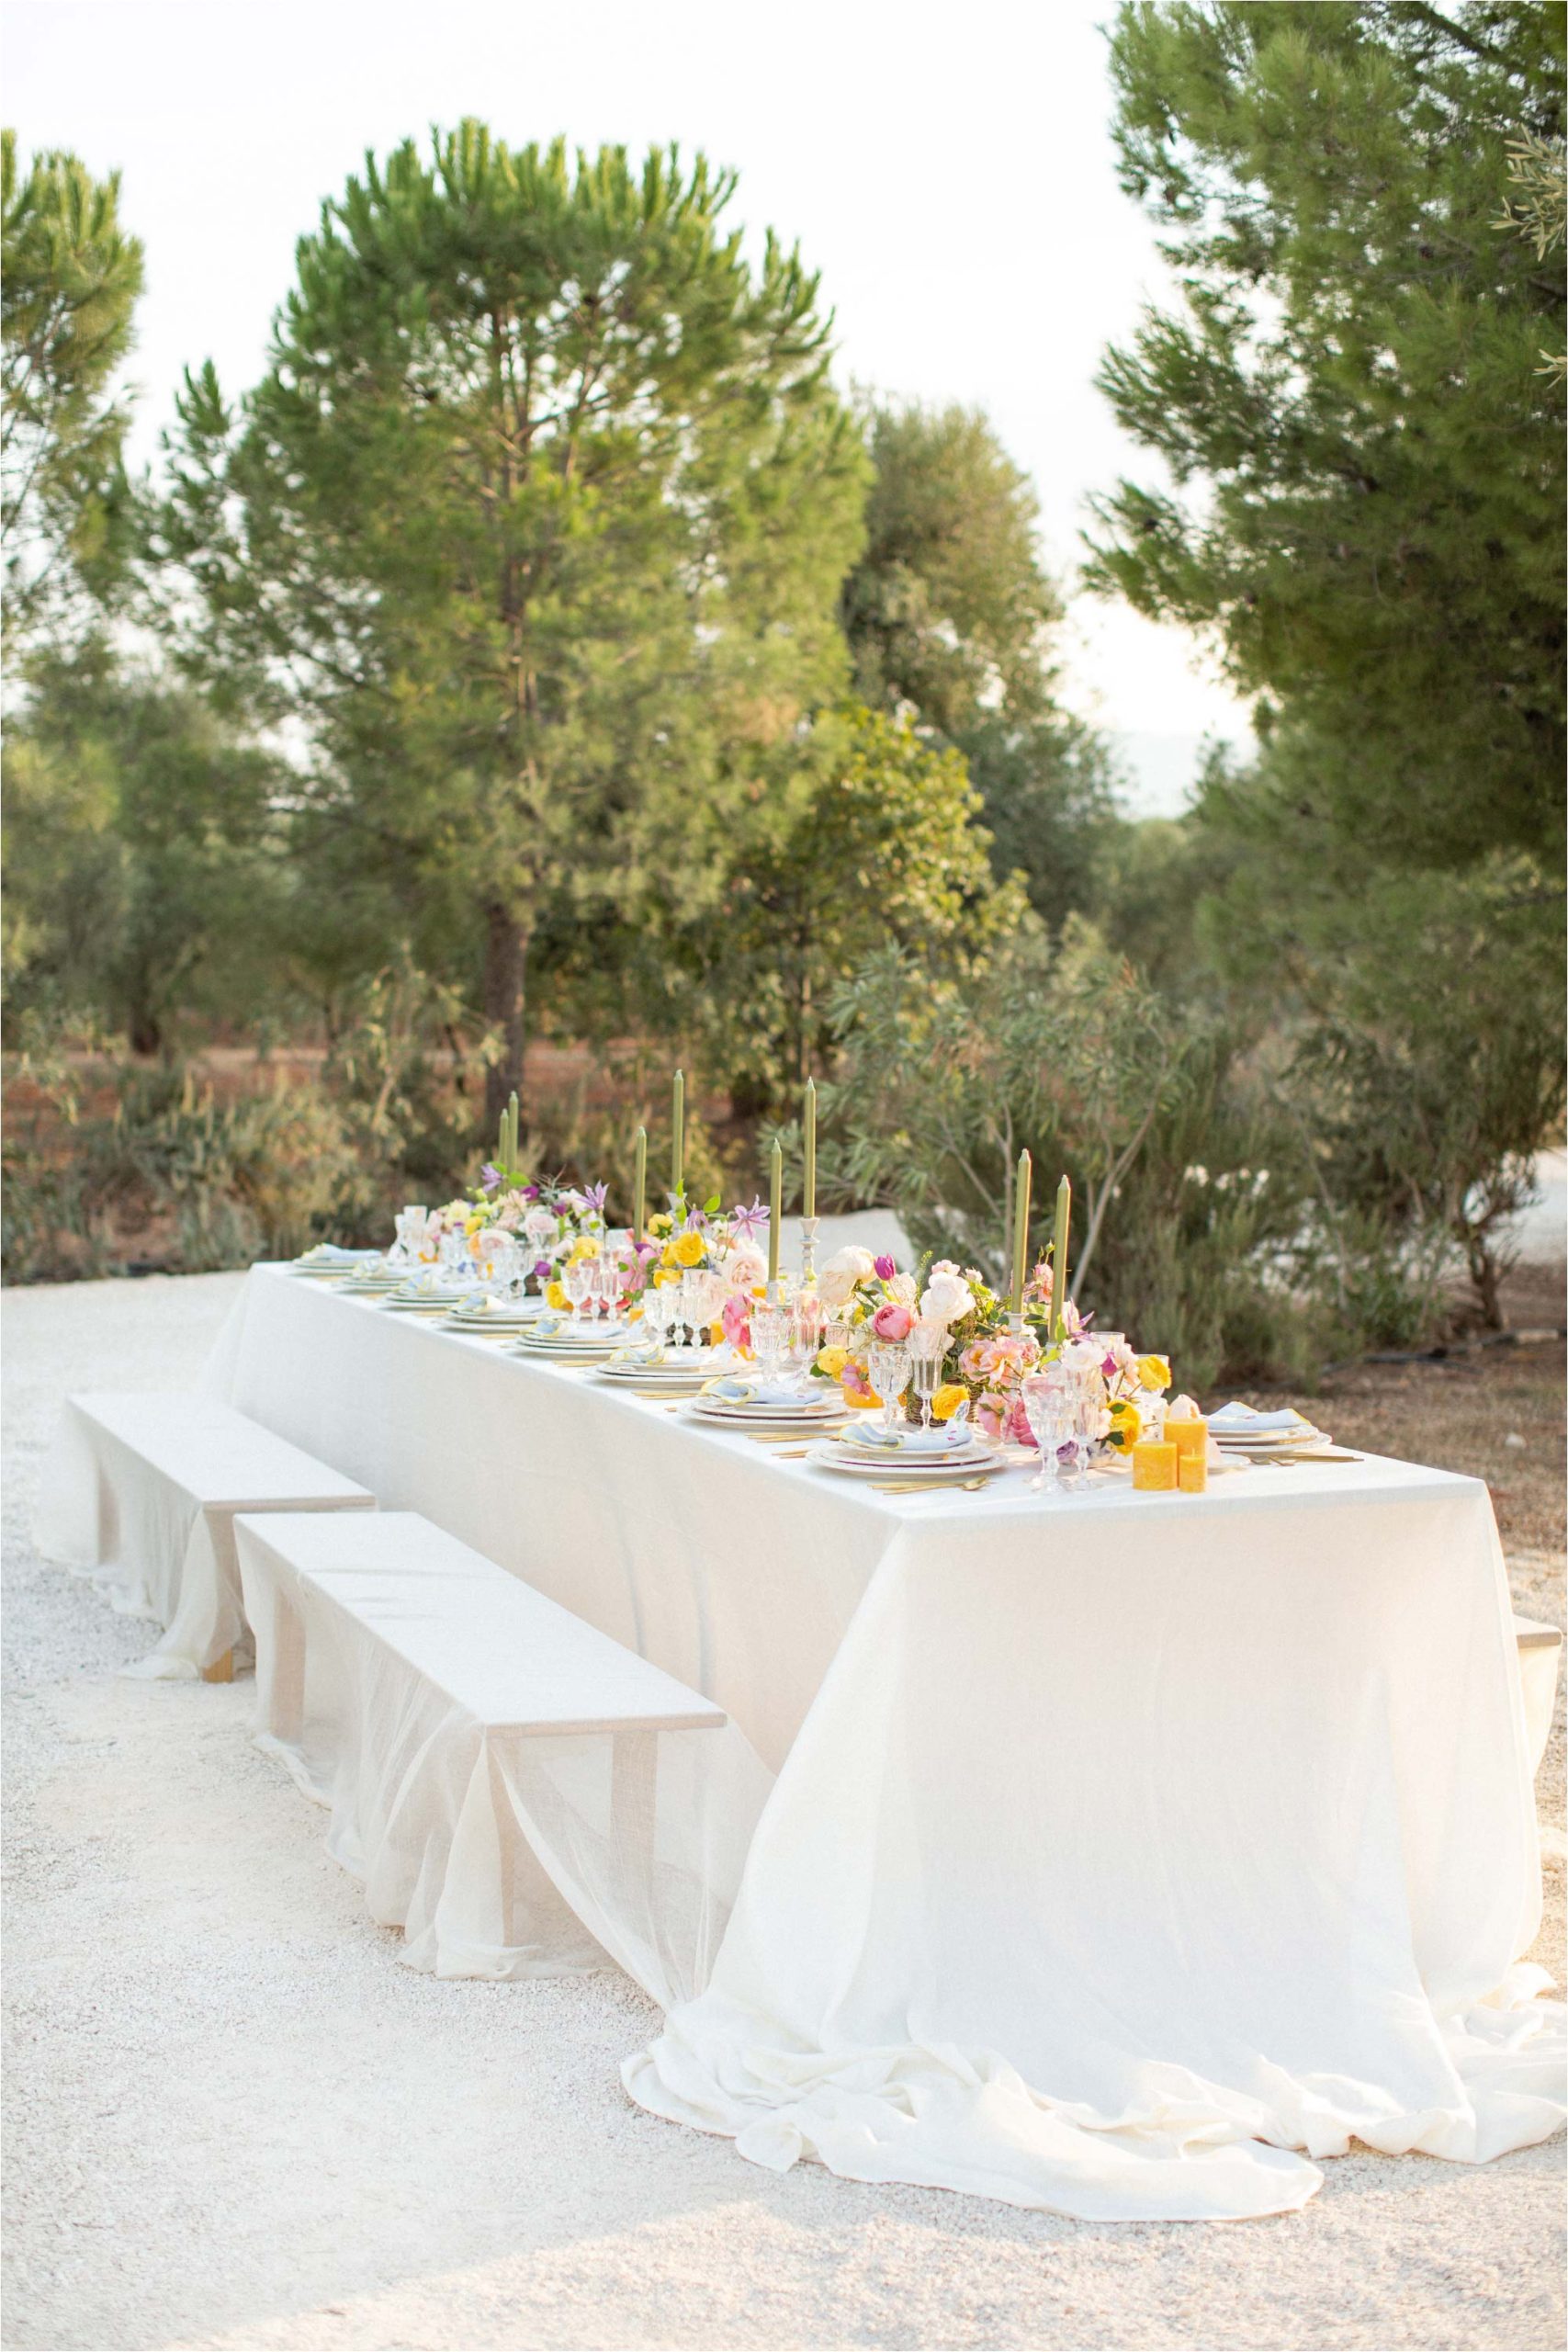 Joy Proctor intimate wedding design in Puglia Italy